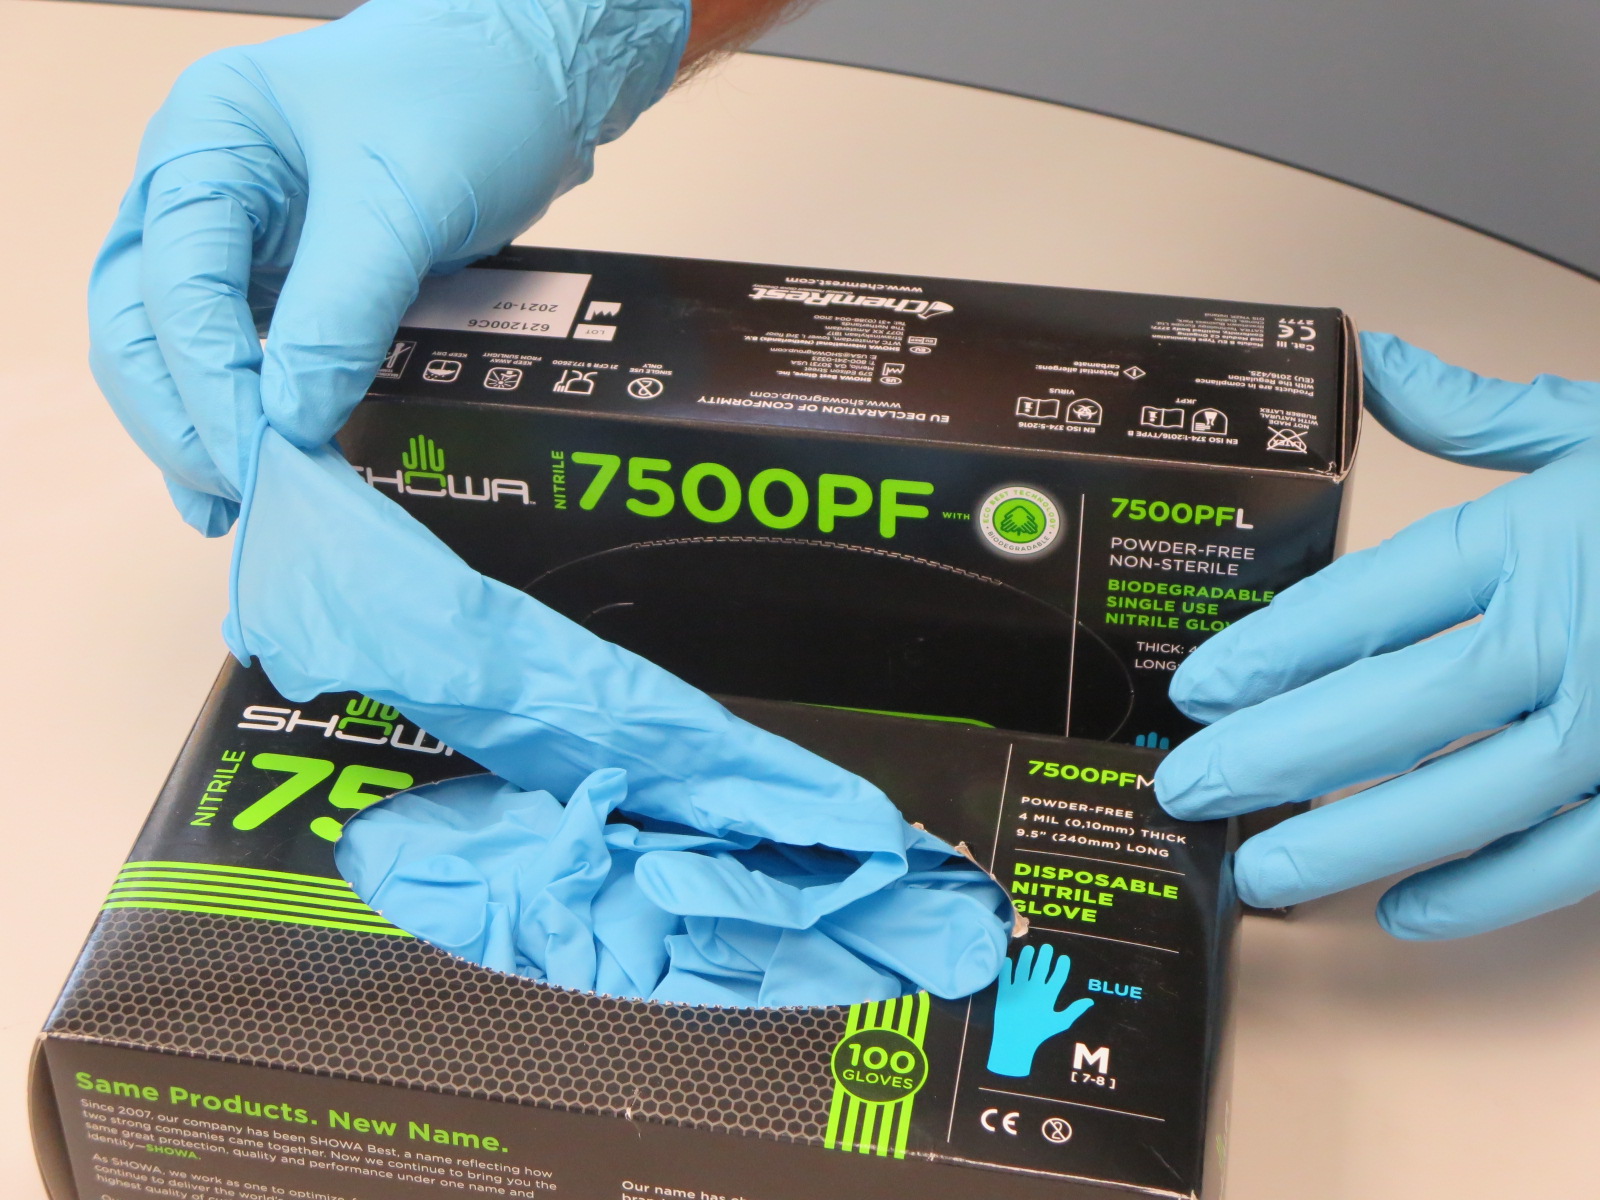 7500PF Showa® Biodegradable Single-Use Powder-Free Latex-Free Blue Nitrile Gloves